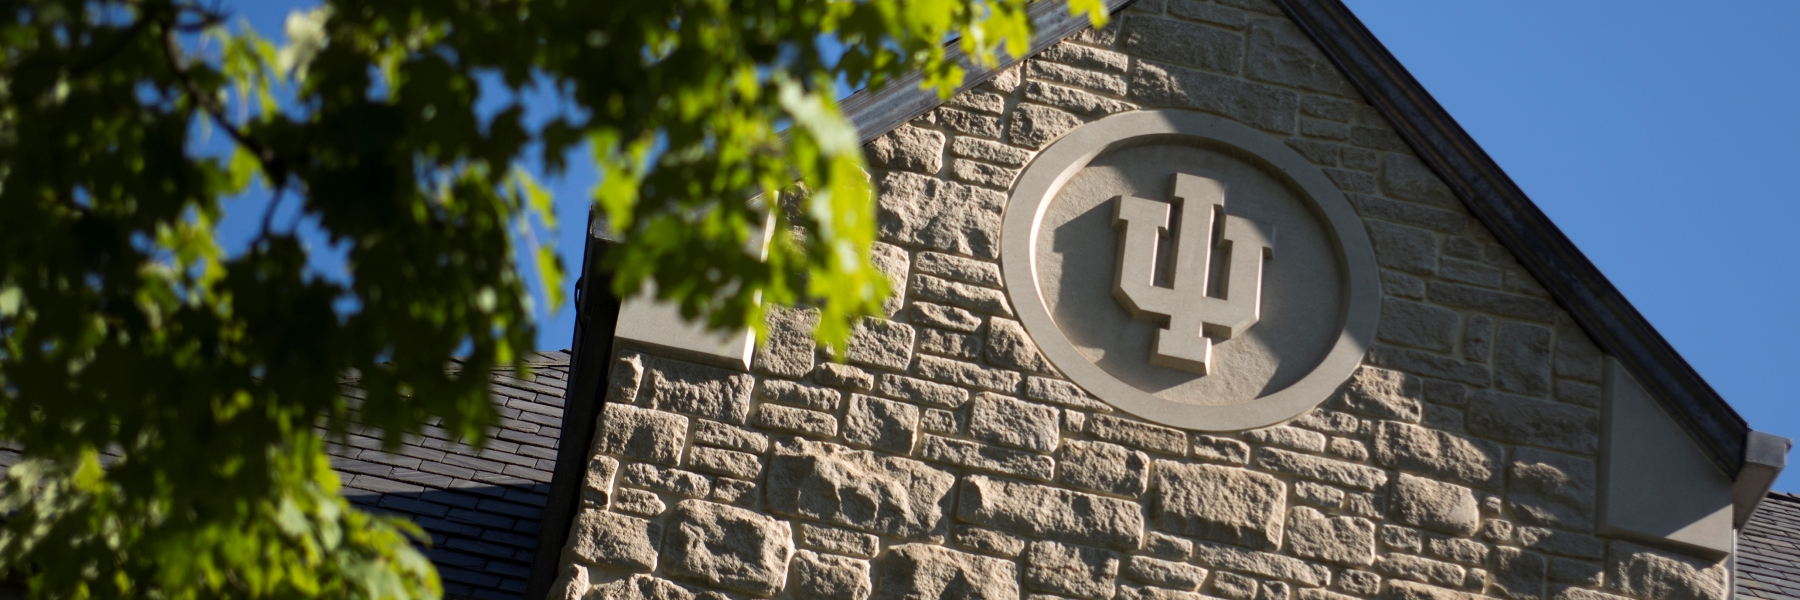 IU logo on limestone building